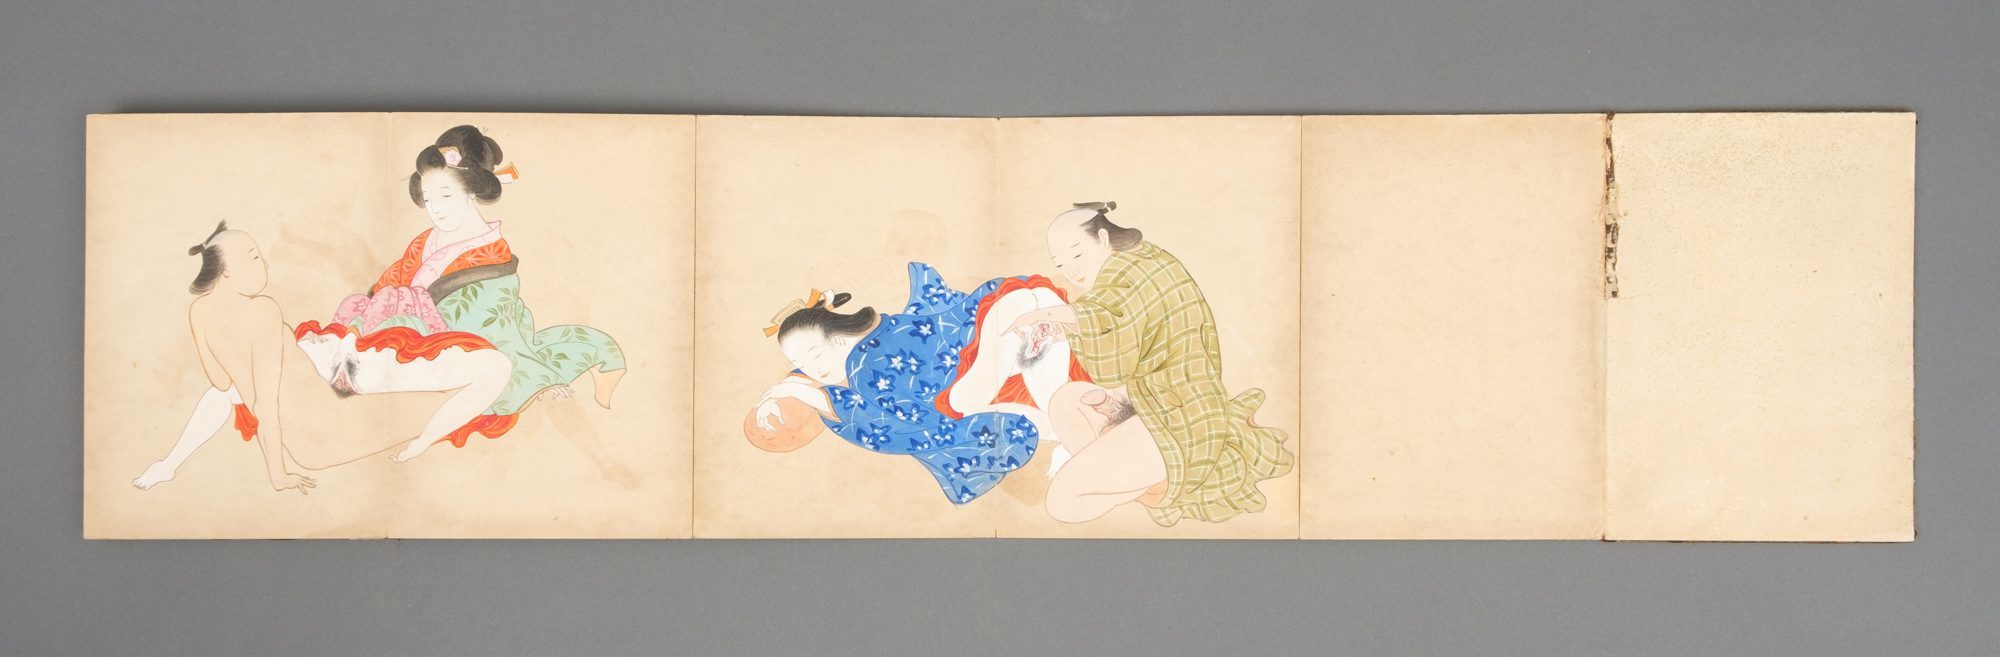 A JAPANESE EROTIC BOOK “SHUNGA”, 1912-1926 (TAISHO PERIOD) - Image 15 of 29